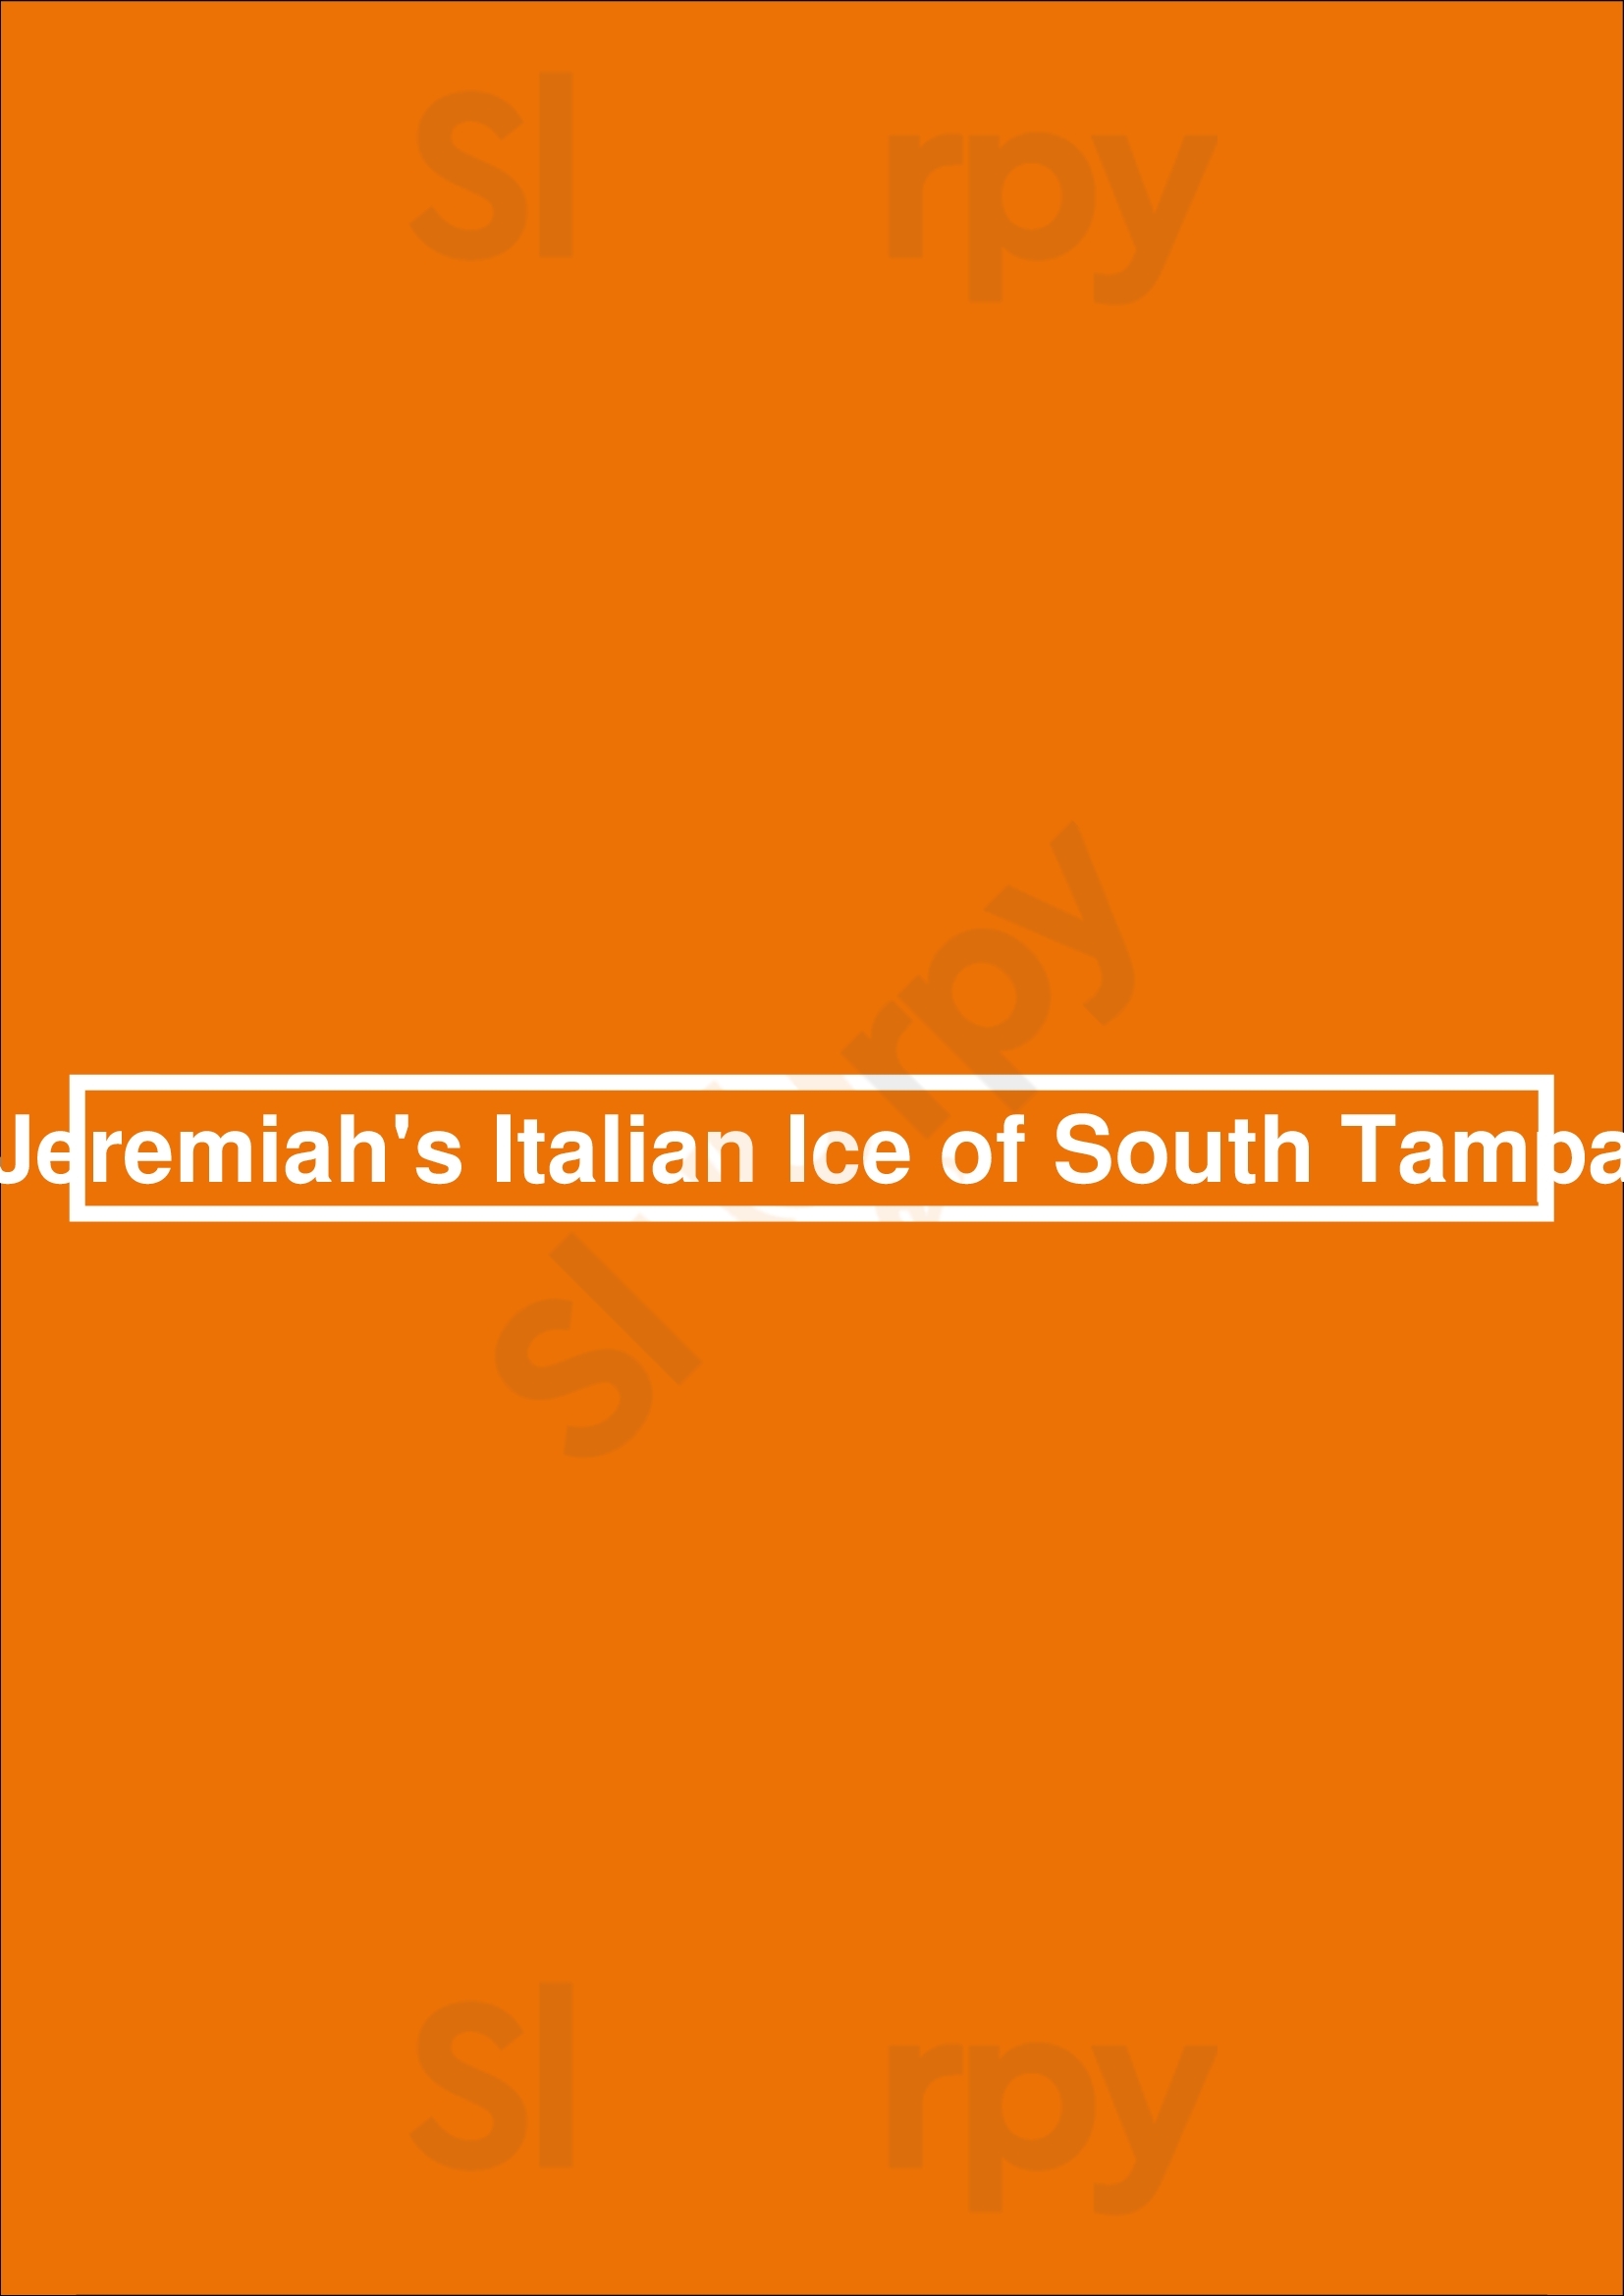 Jeremiah's Italian Ice Tampa Menu - 1